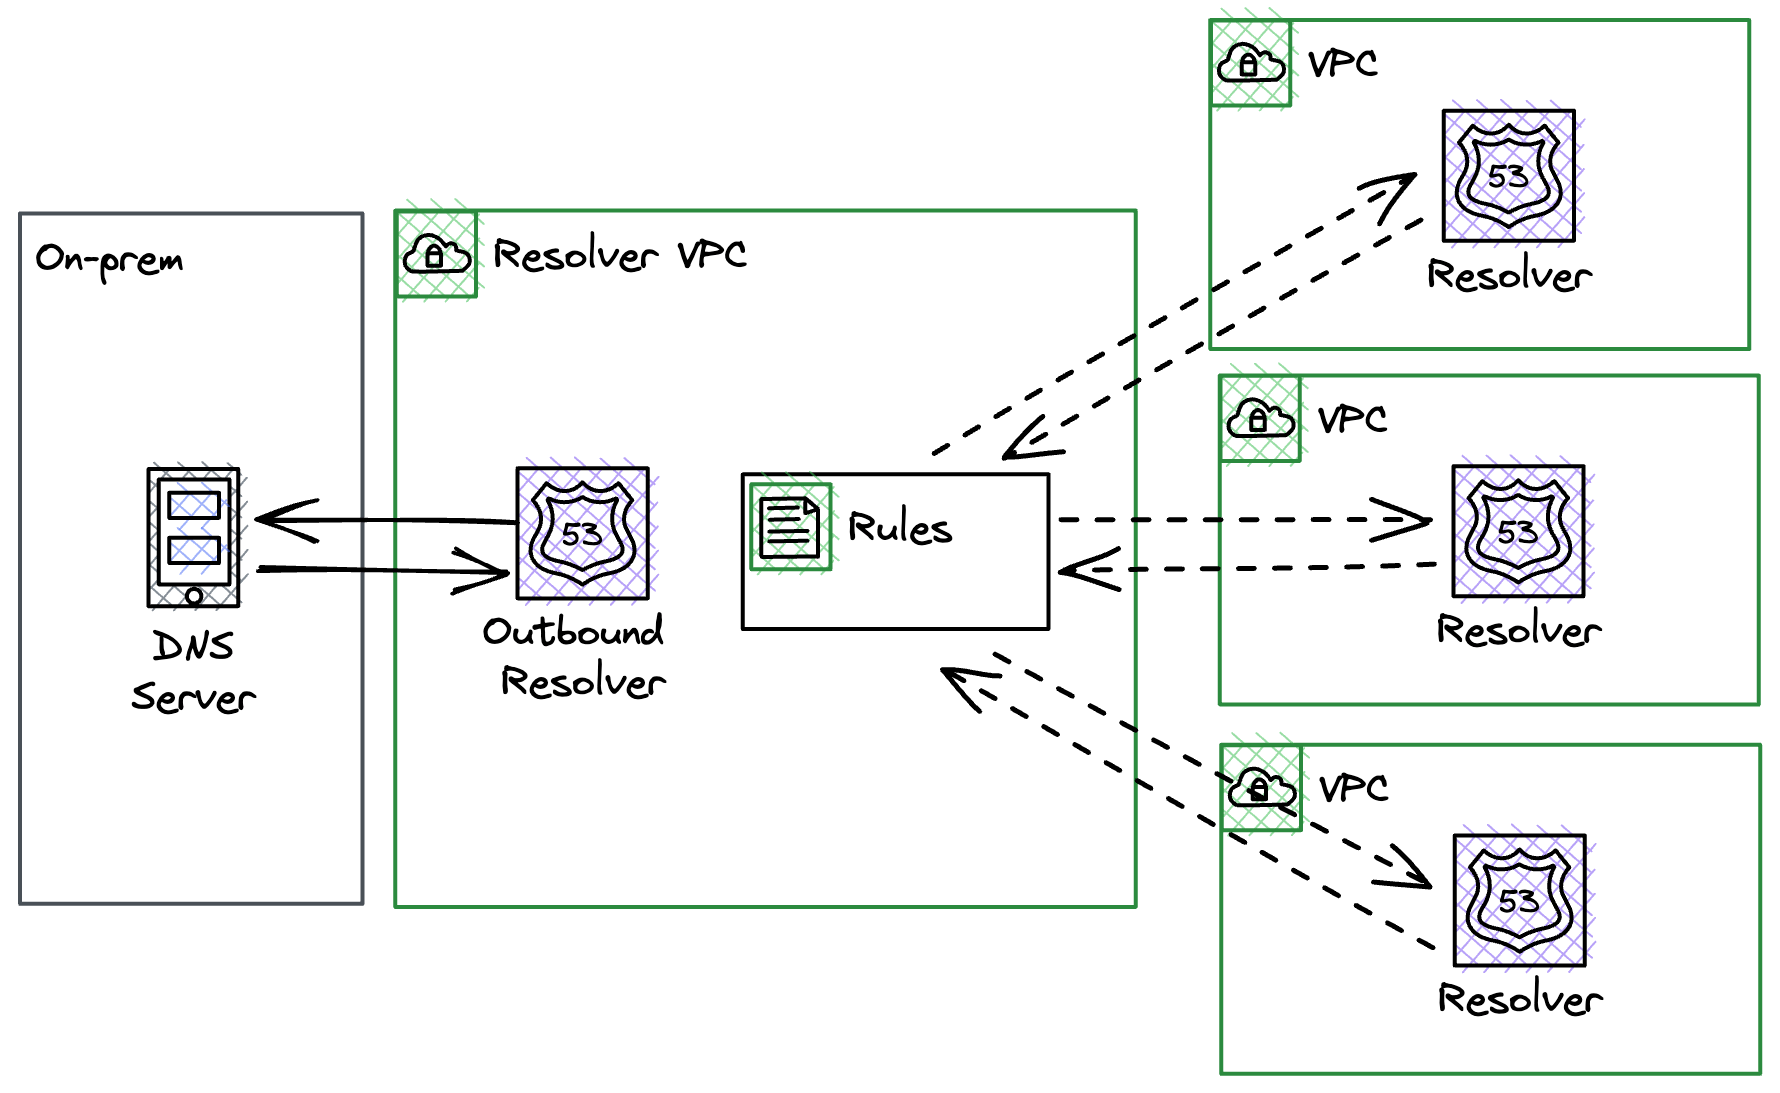 RAM VPC Rule Sharing